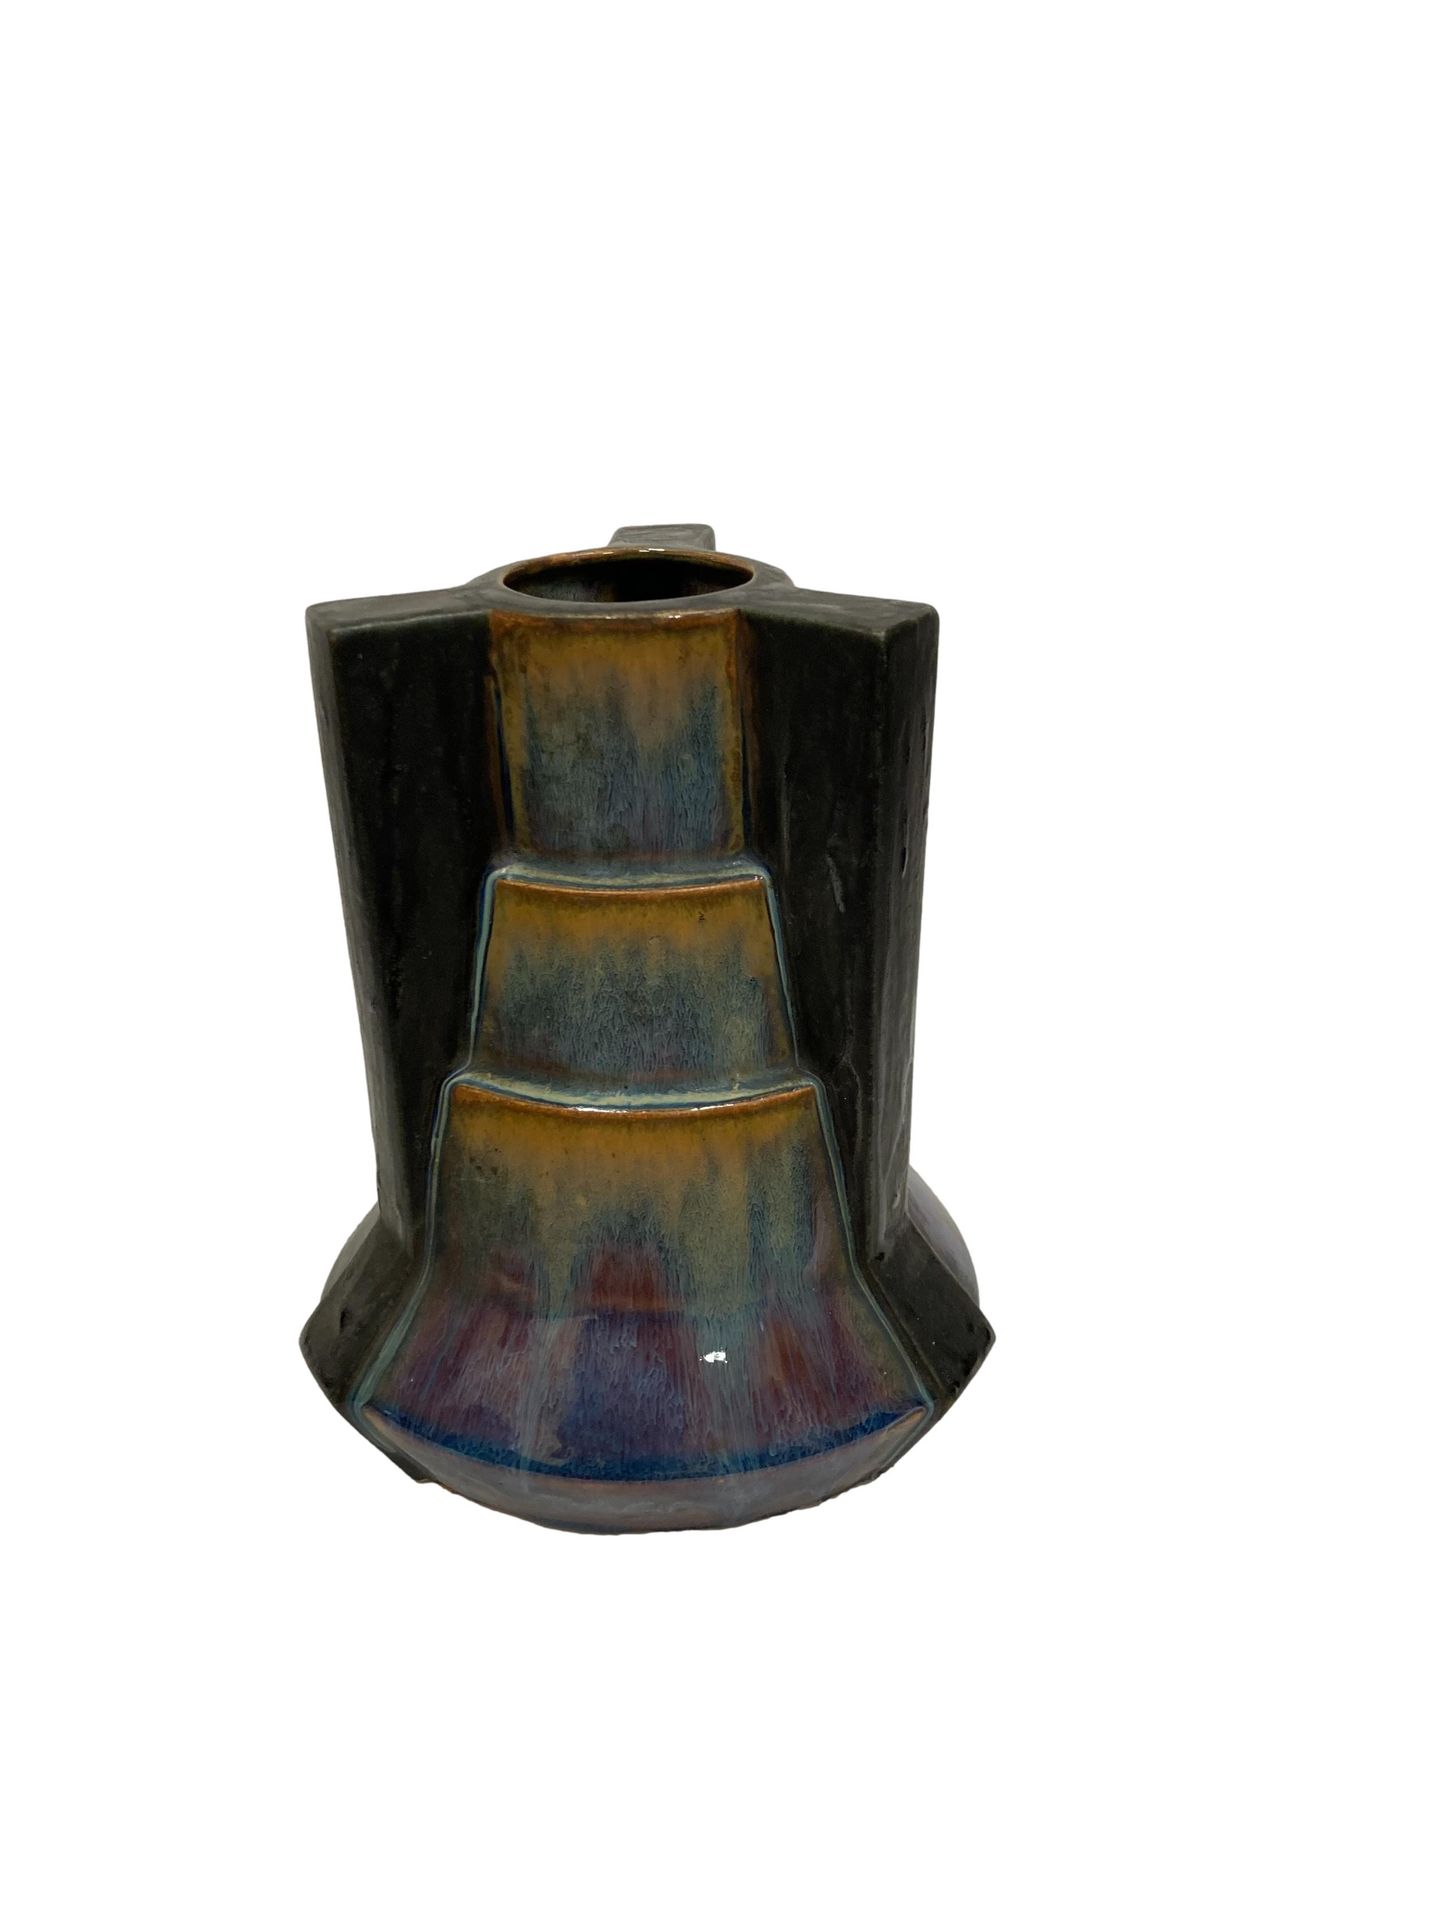 Null 邓巴克

棕色釉面陶瓷层叠式花瓶，带翼状把手

H.23厘米